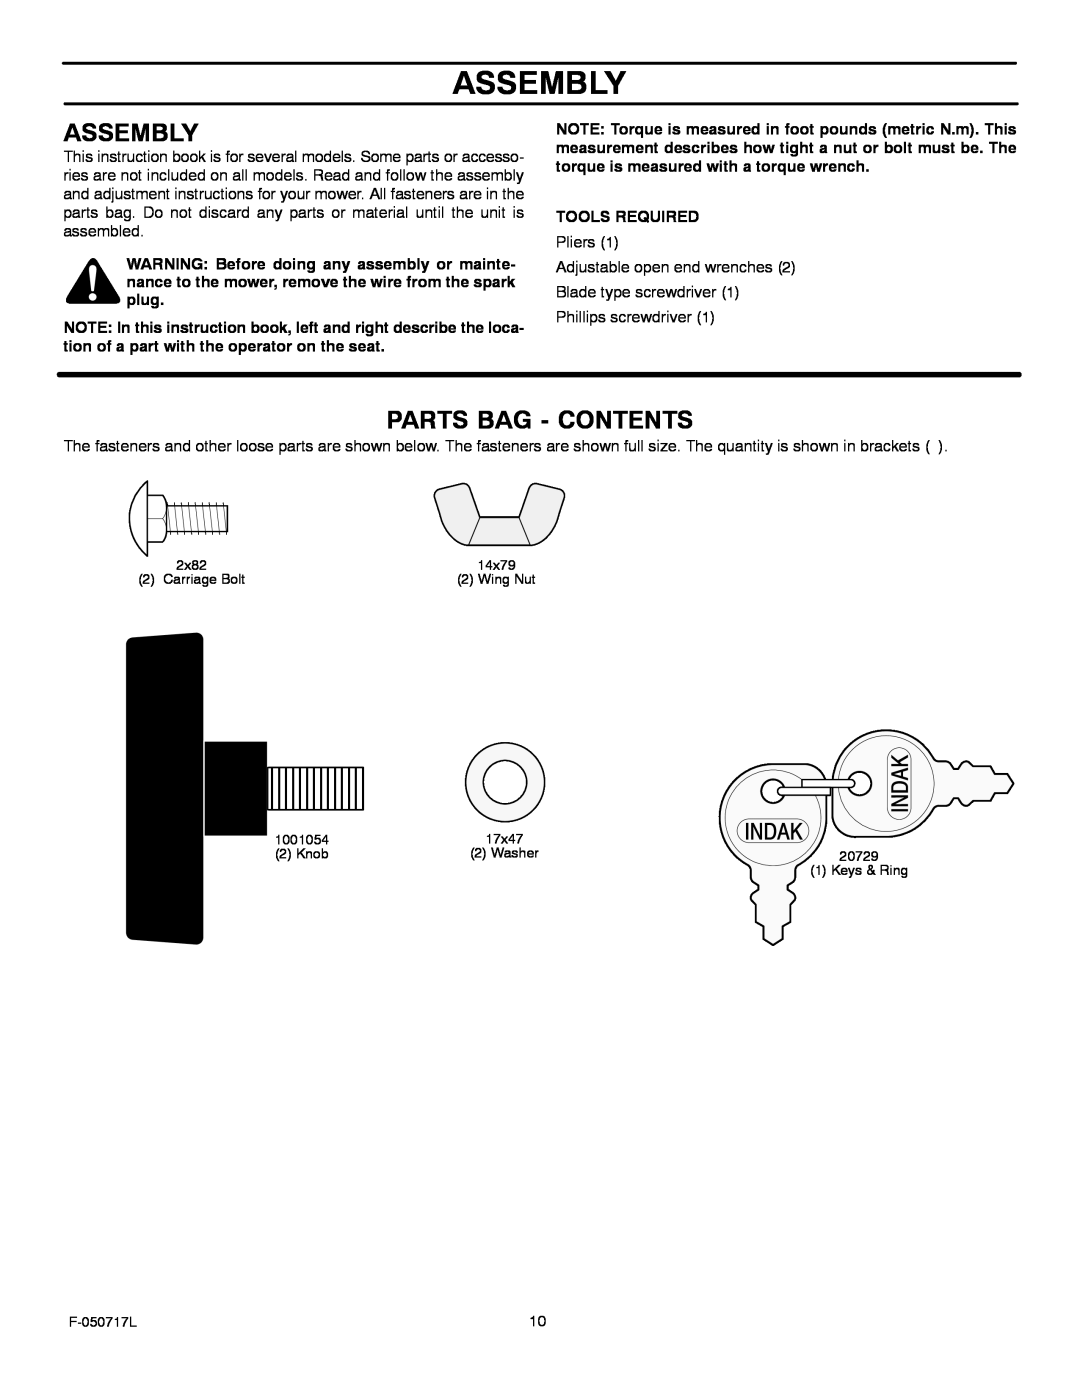 Murray 387002x92D manual Assembly, Parts Bag - Contents 